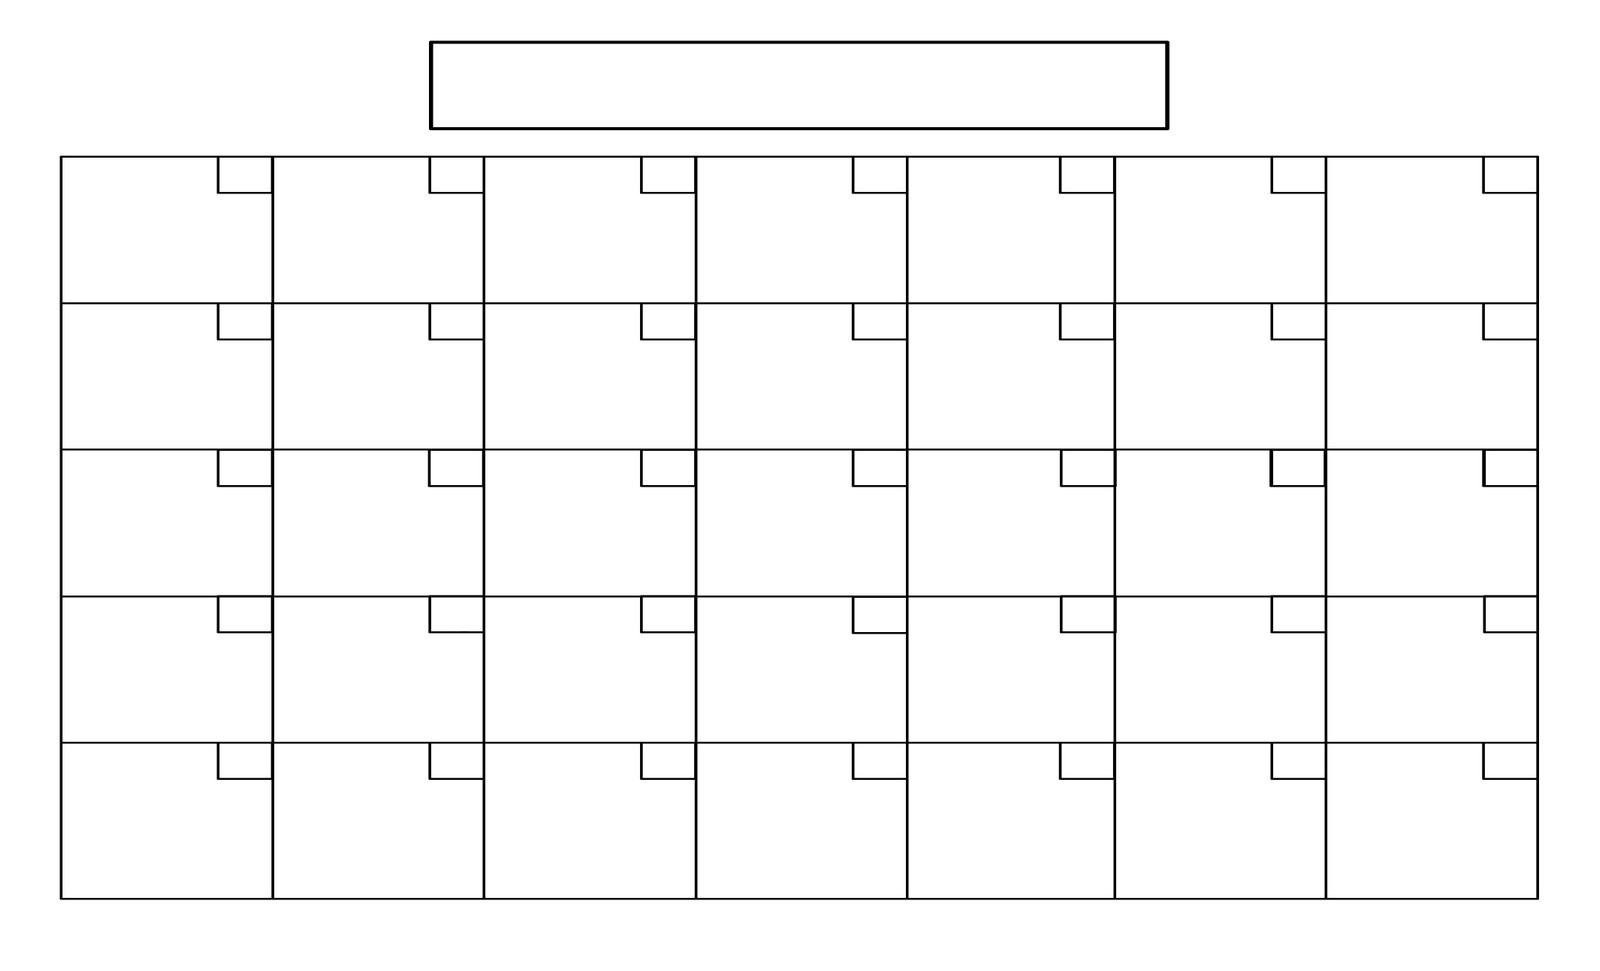 16 Simple Blank Calendar Template Images - Full Size Blank-Printable 8.5 By 11 Blank Calendar